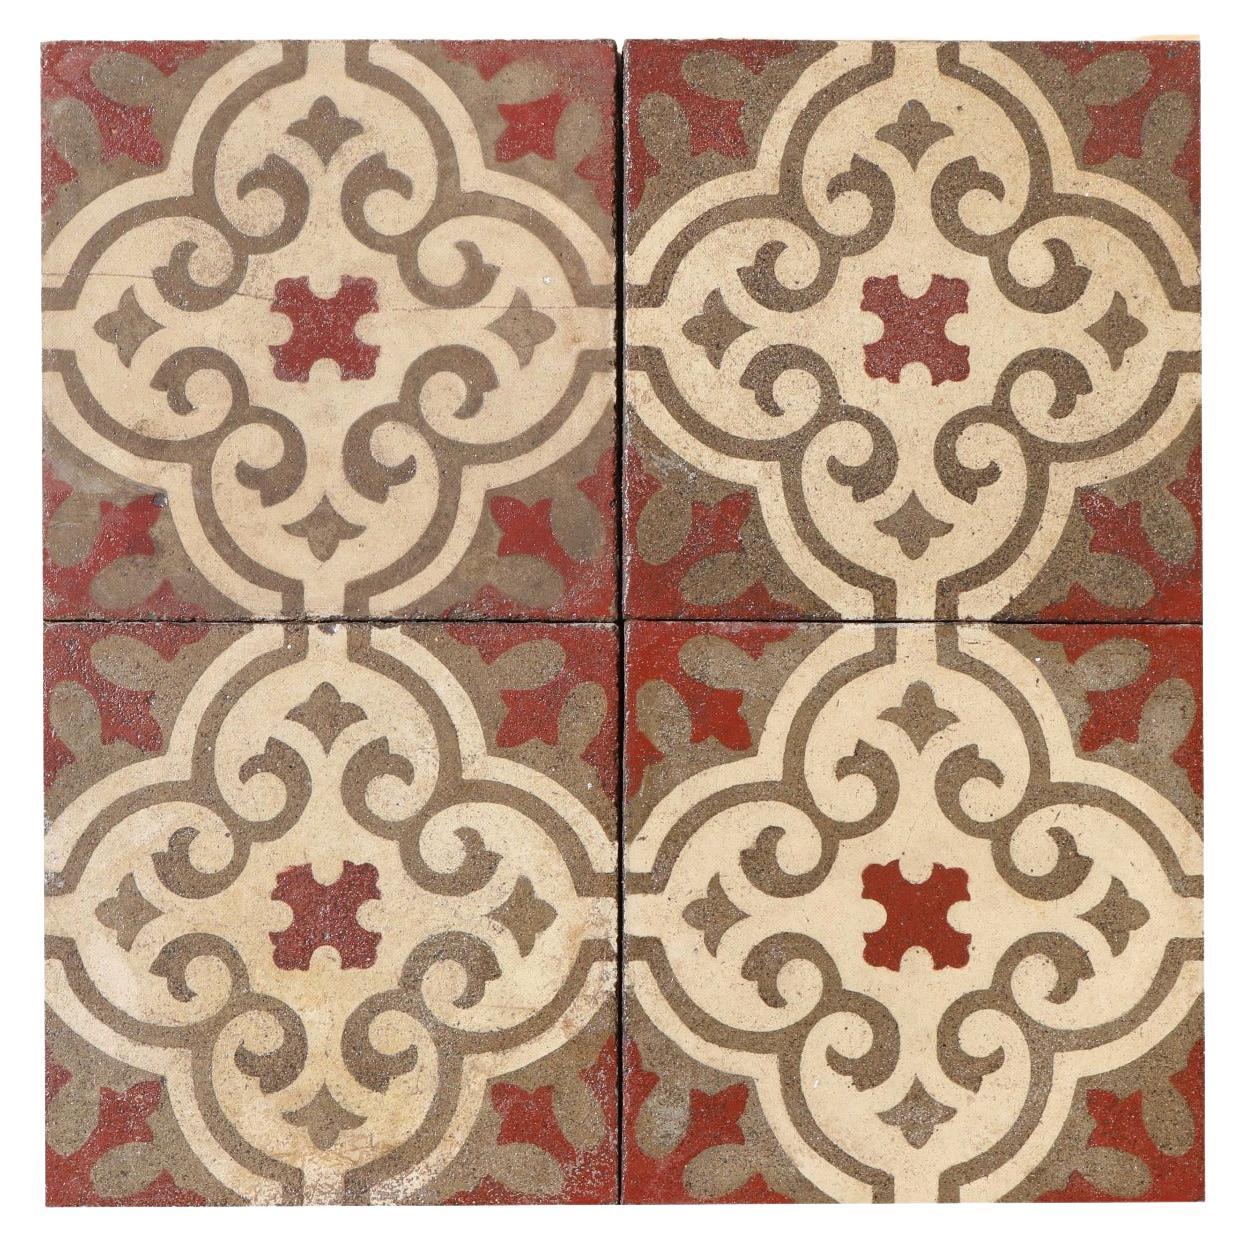 Reclaimed Floor Tiles For Sale